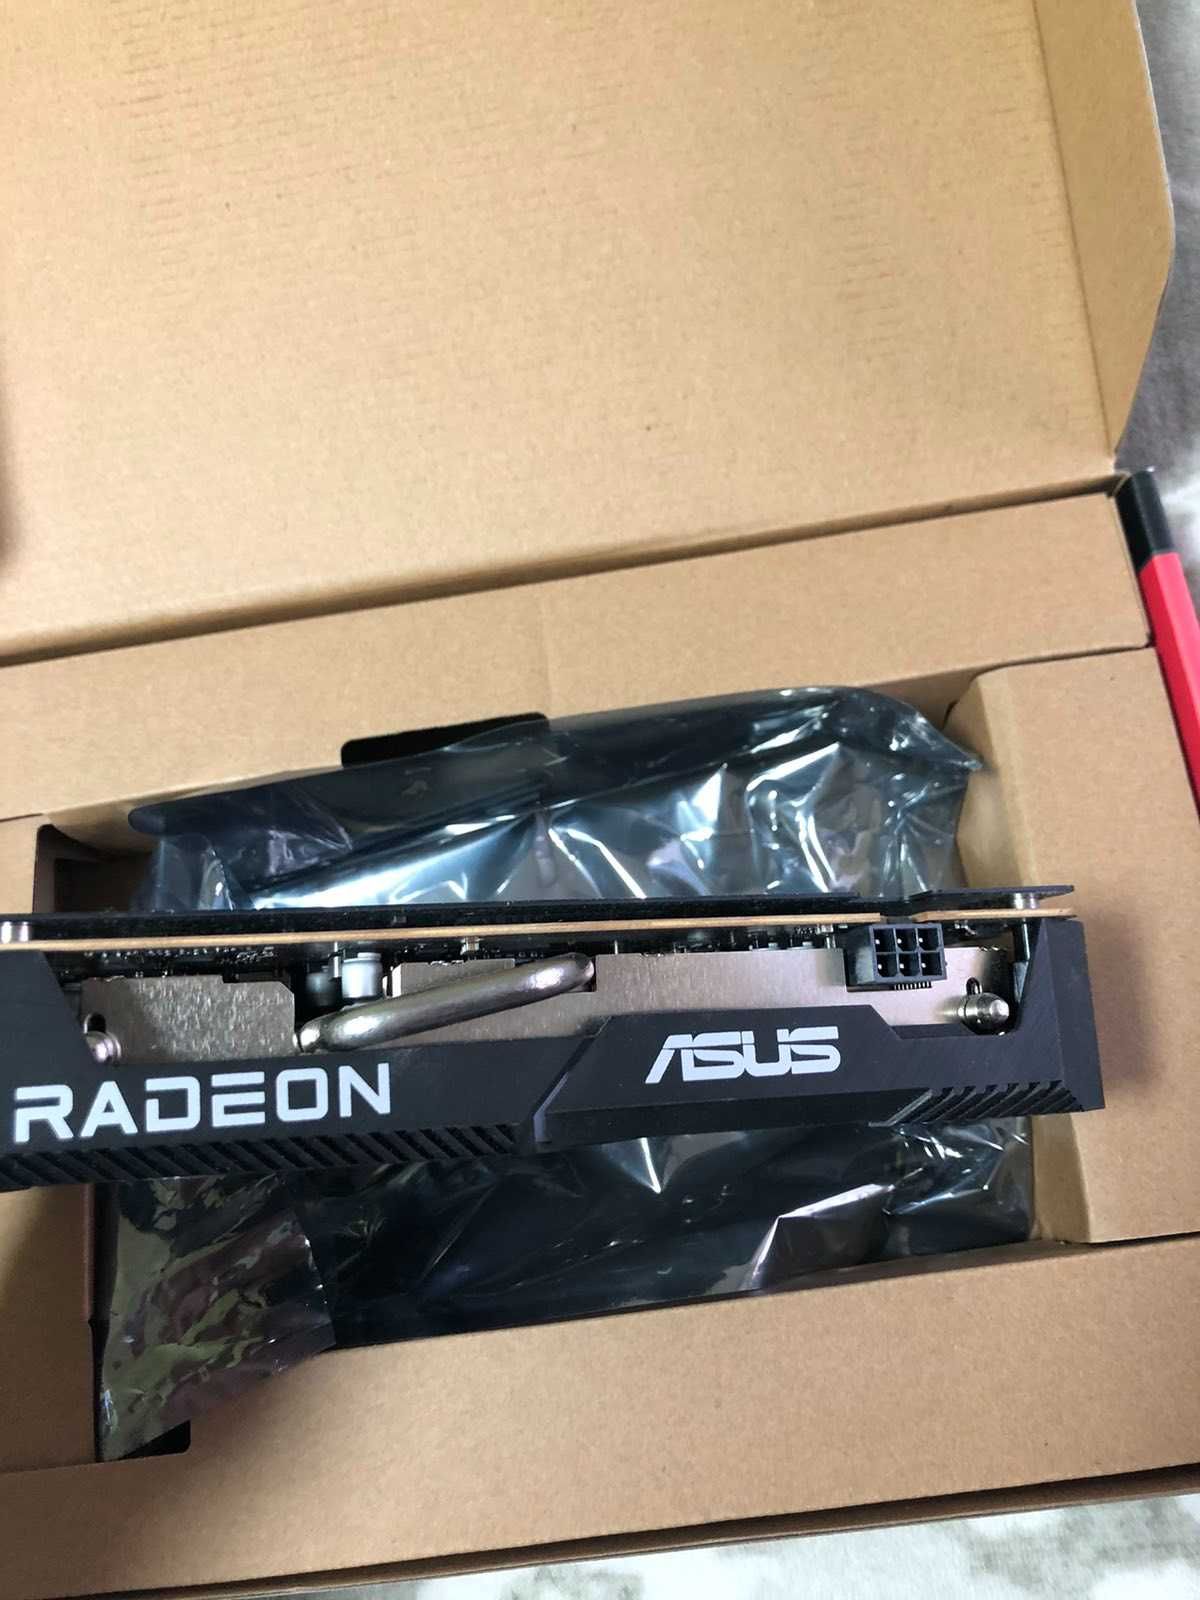 Asus amd Radeon rx6500xt 4gb gddr6
Dual oc edition